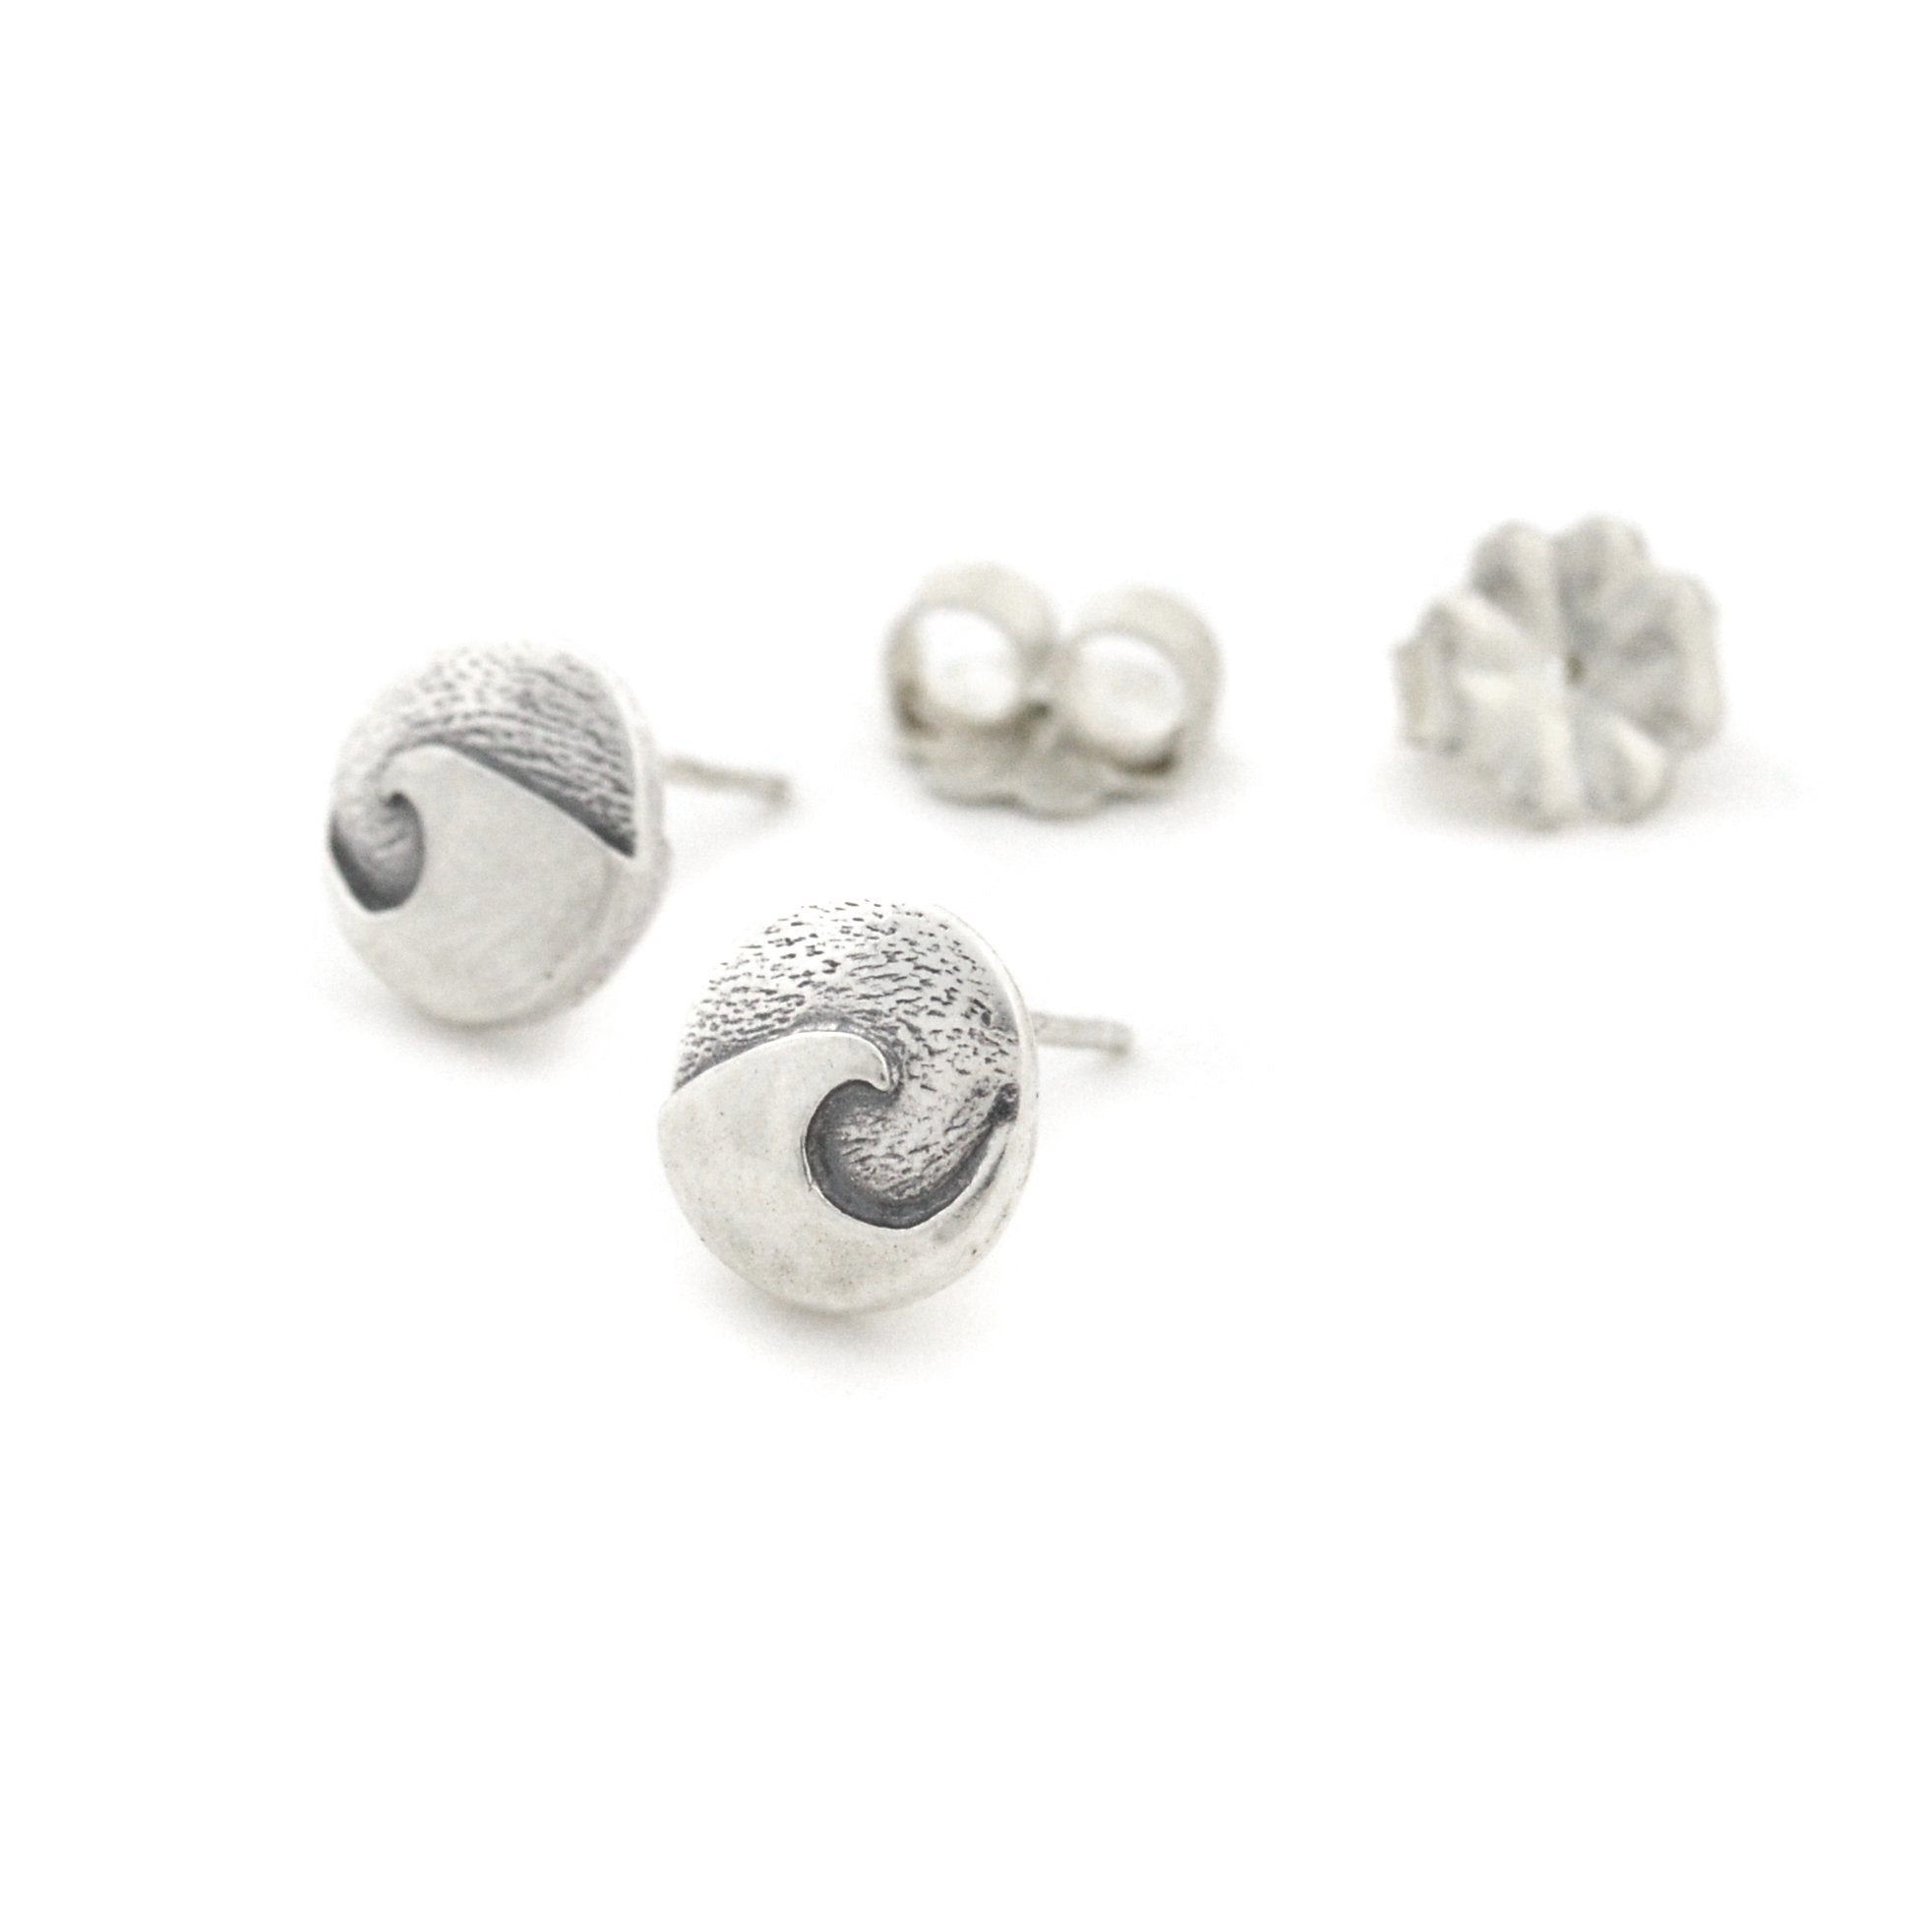 Mini Cresting Wave Post Earrings - Silver Earrings   3730 - handmade by Beth Millner Jewelry